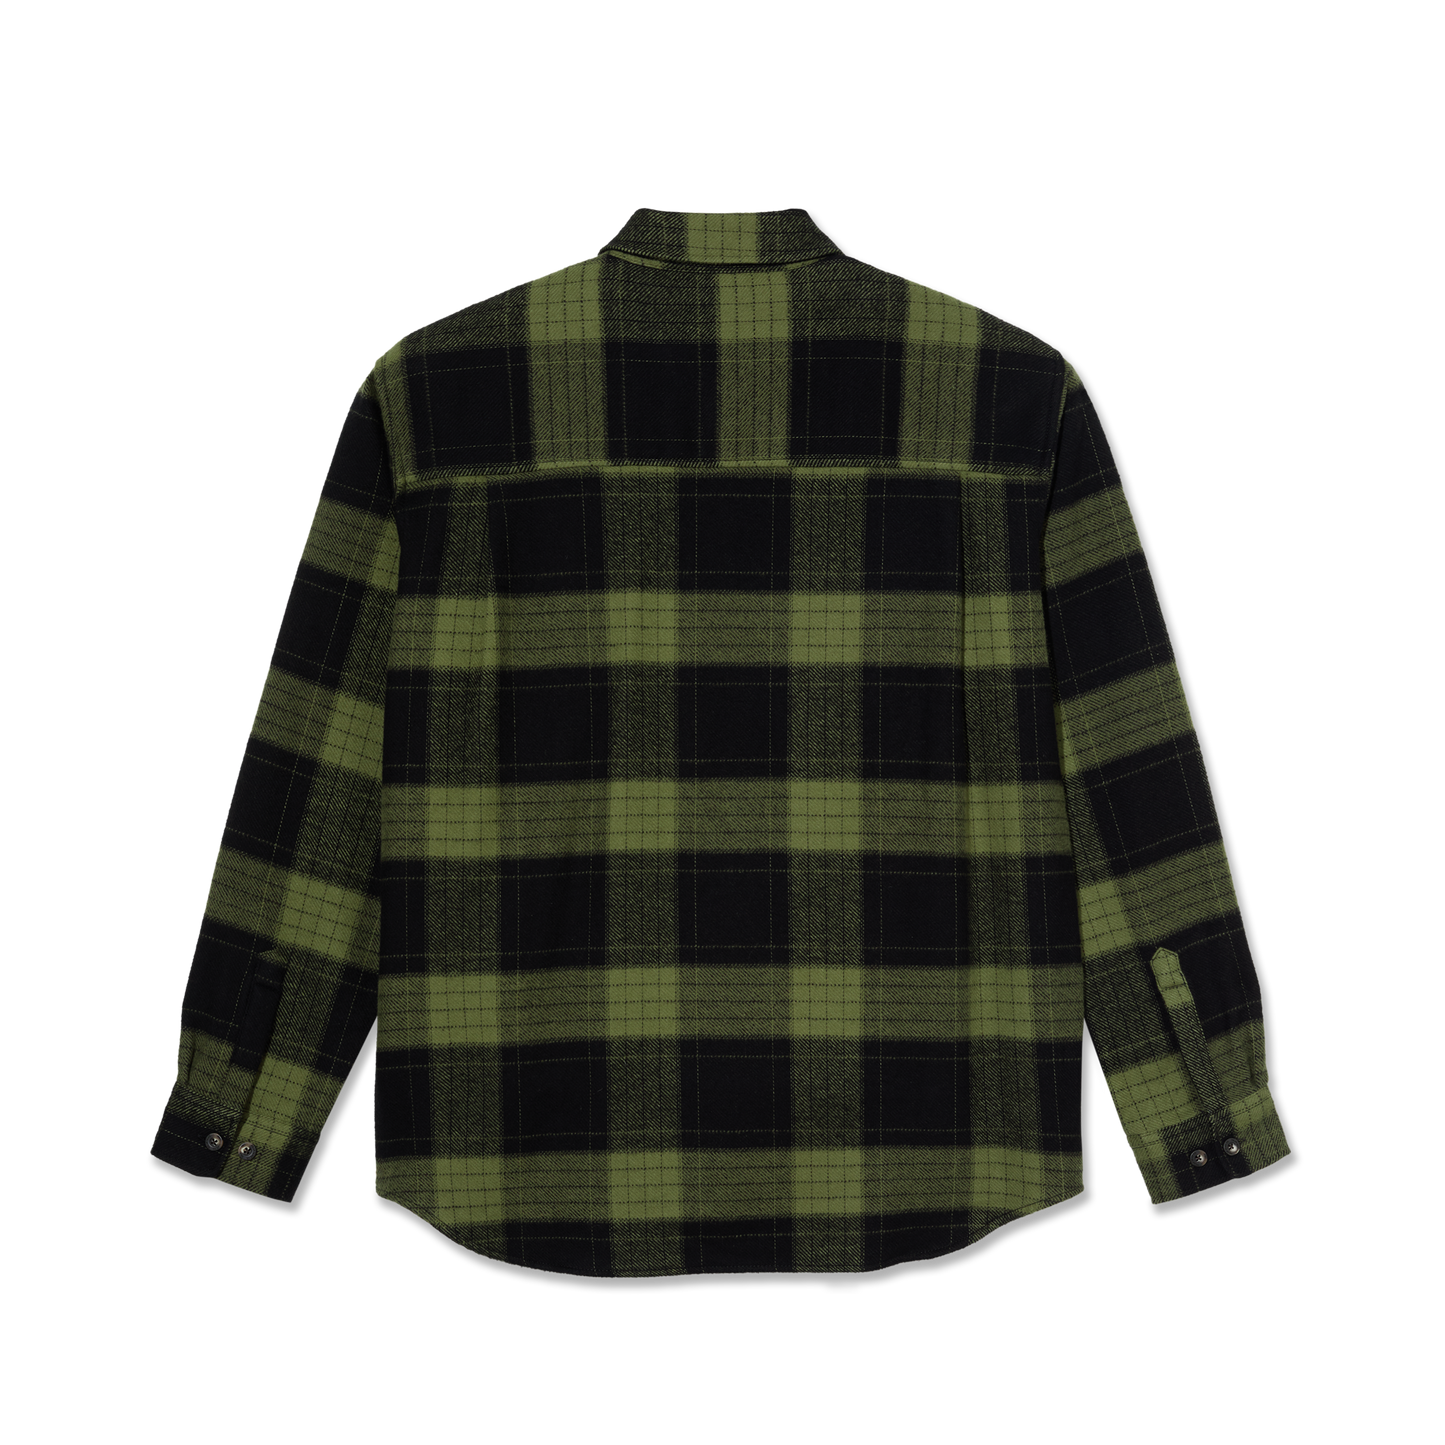 Polar Mike LS Shirt Flannel Black/Army Green